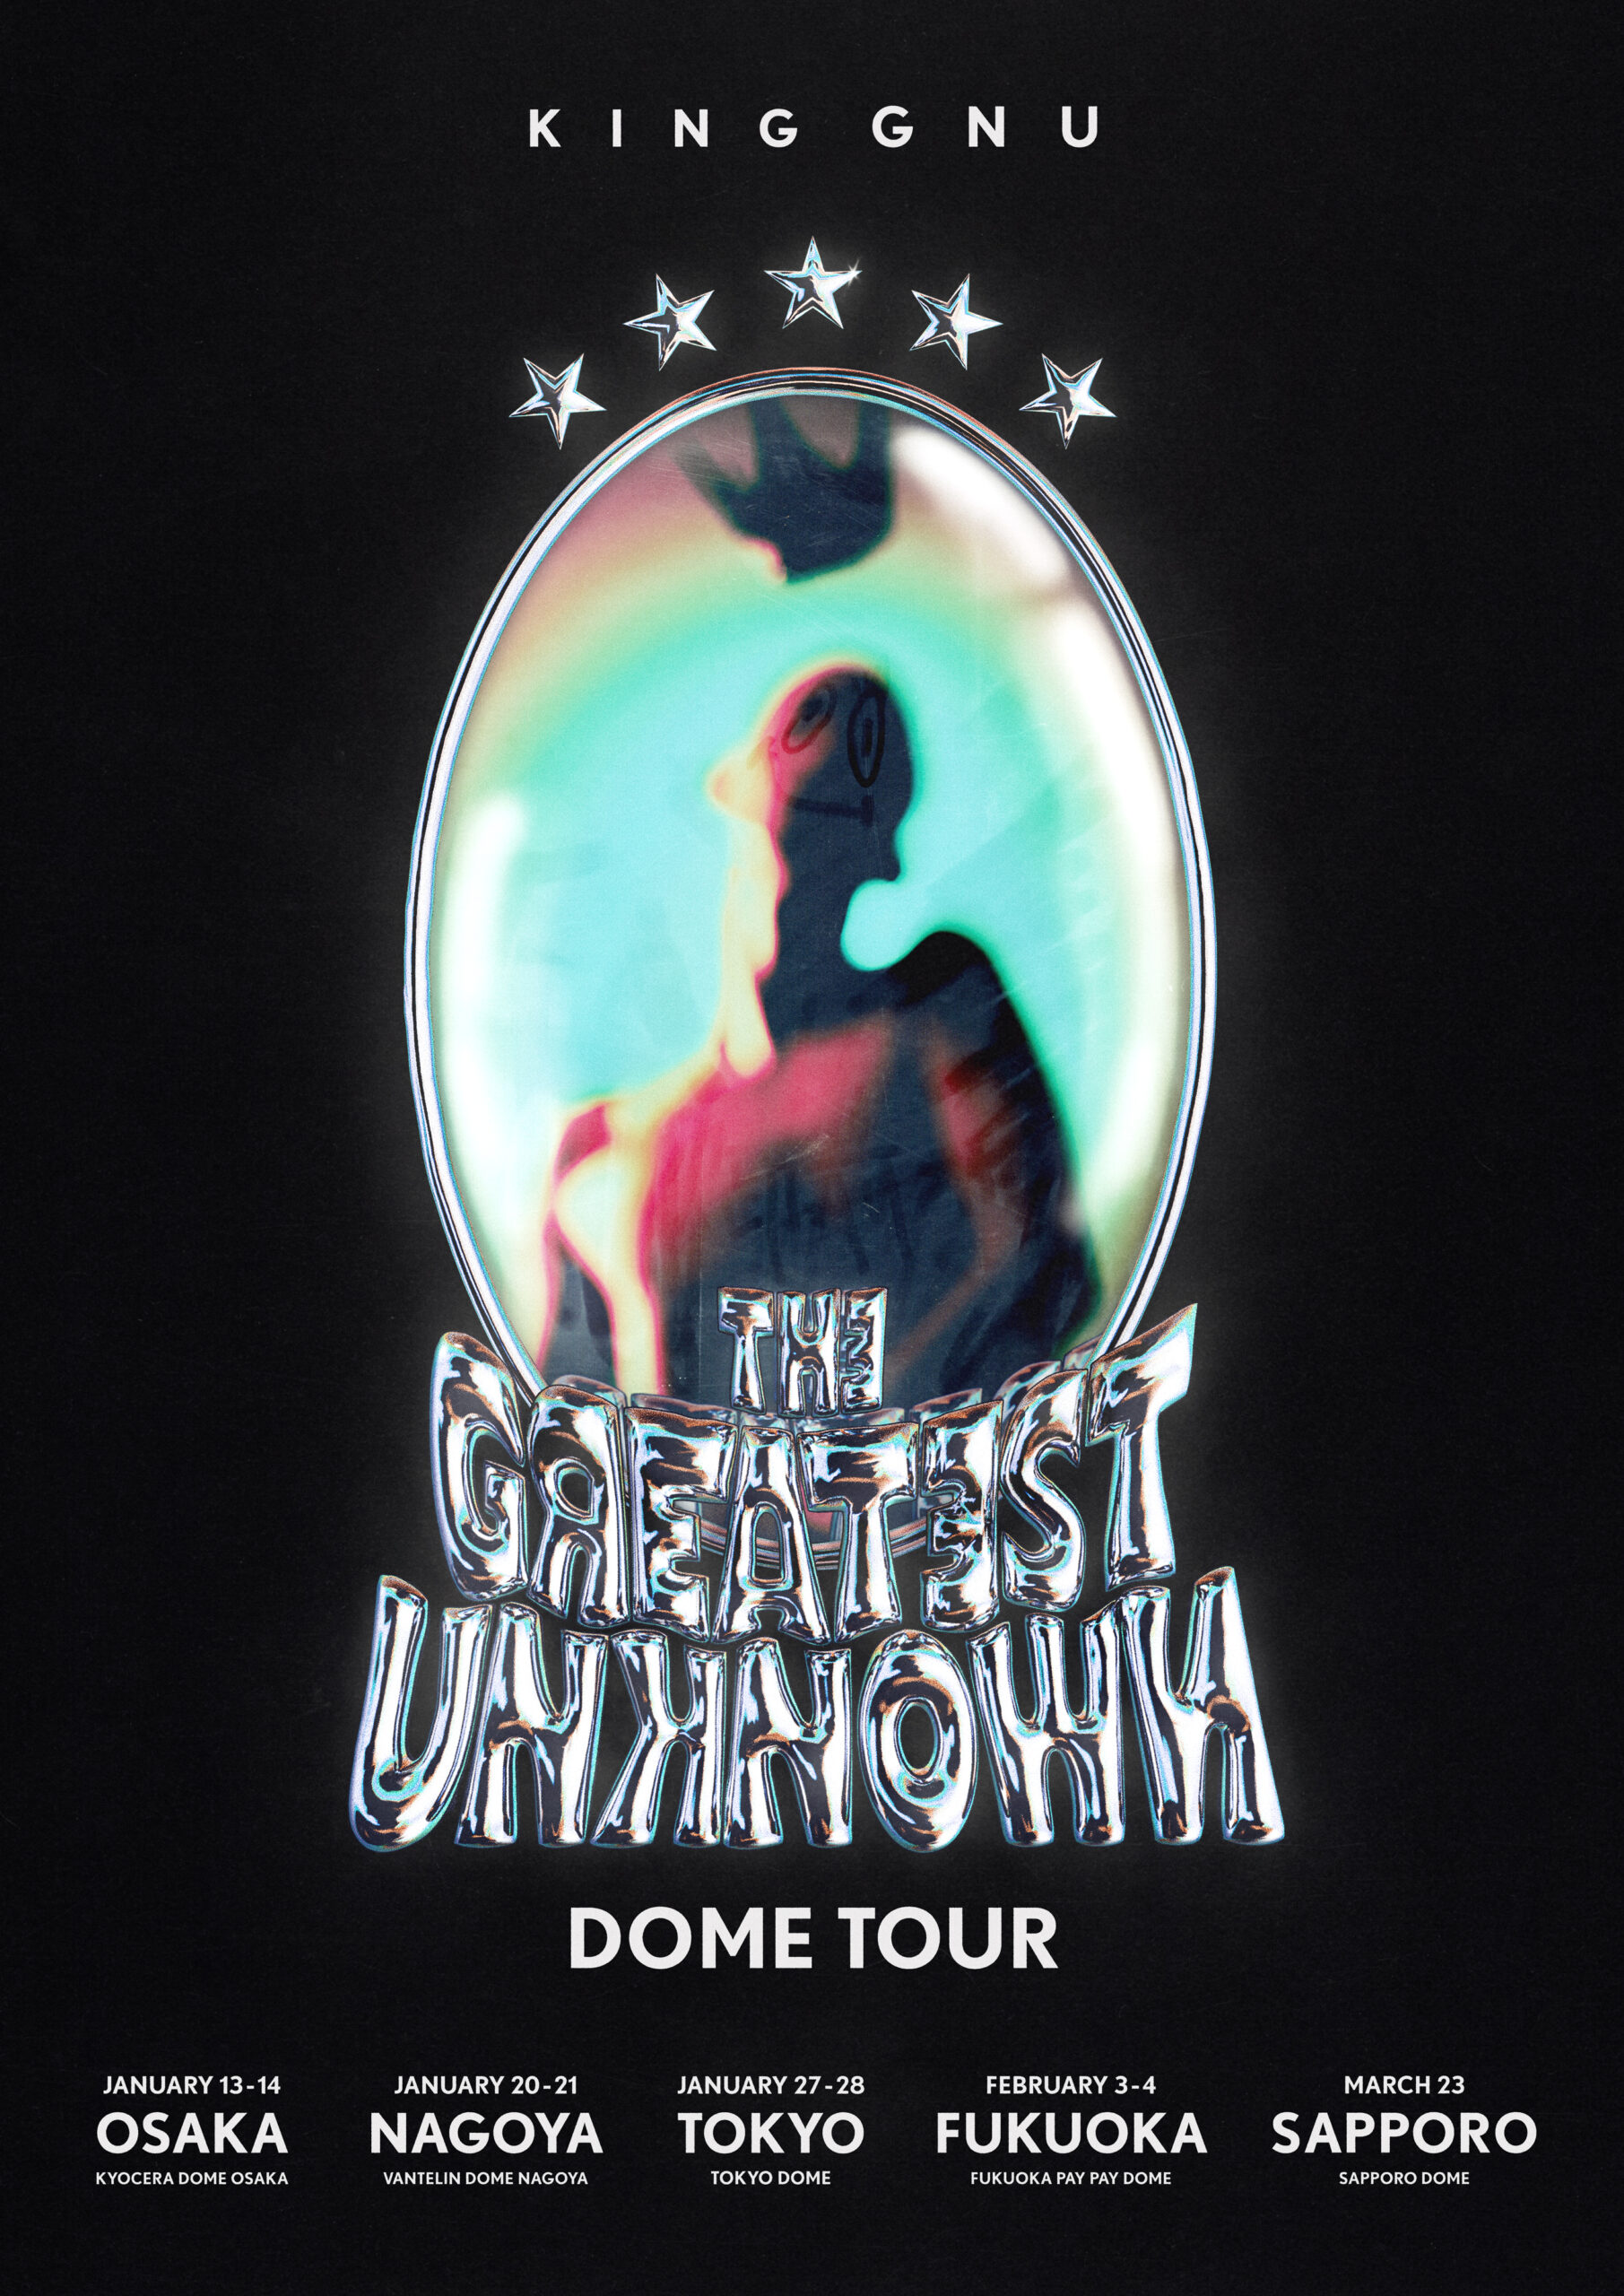 King Gnu Dome Tour「THE GREATEST UNKNOWN」物販整理券 オフィシャルグッズ会場販売整理券2次受付に関して |  LINEで整理券 | mogily（モギリー）| デジタル整理券で順番待ちを解消する整理券システム